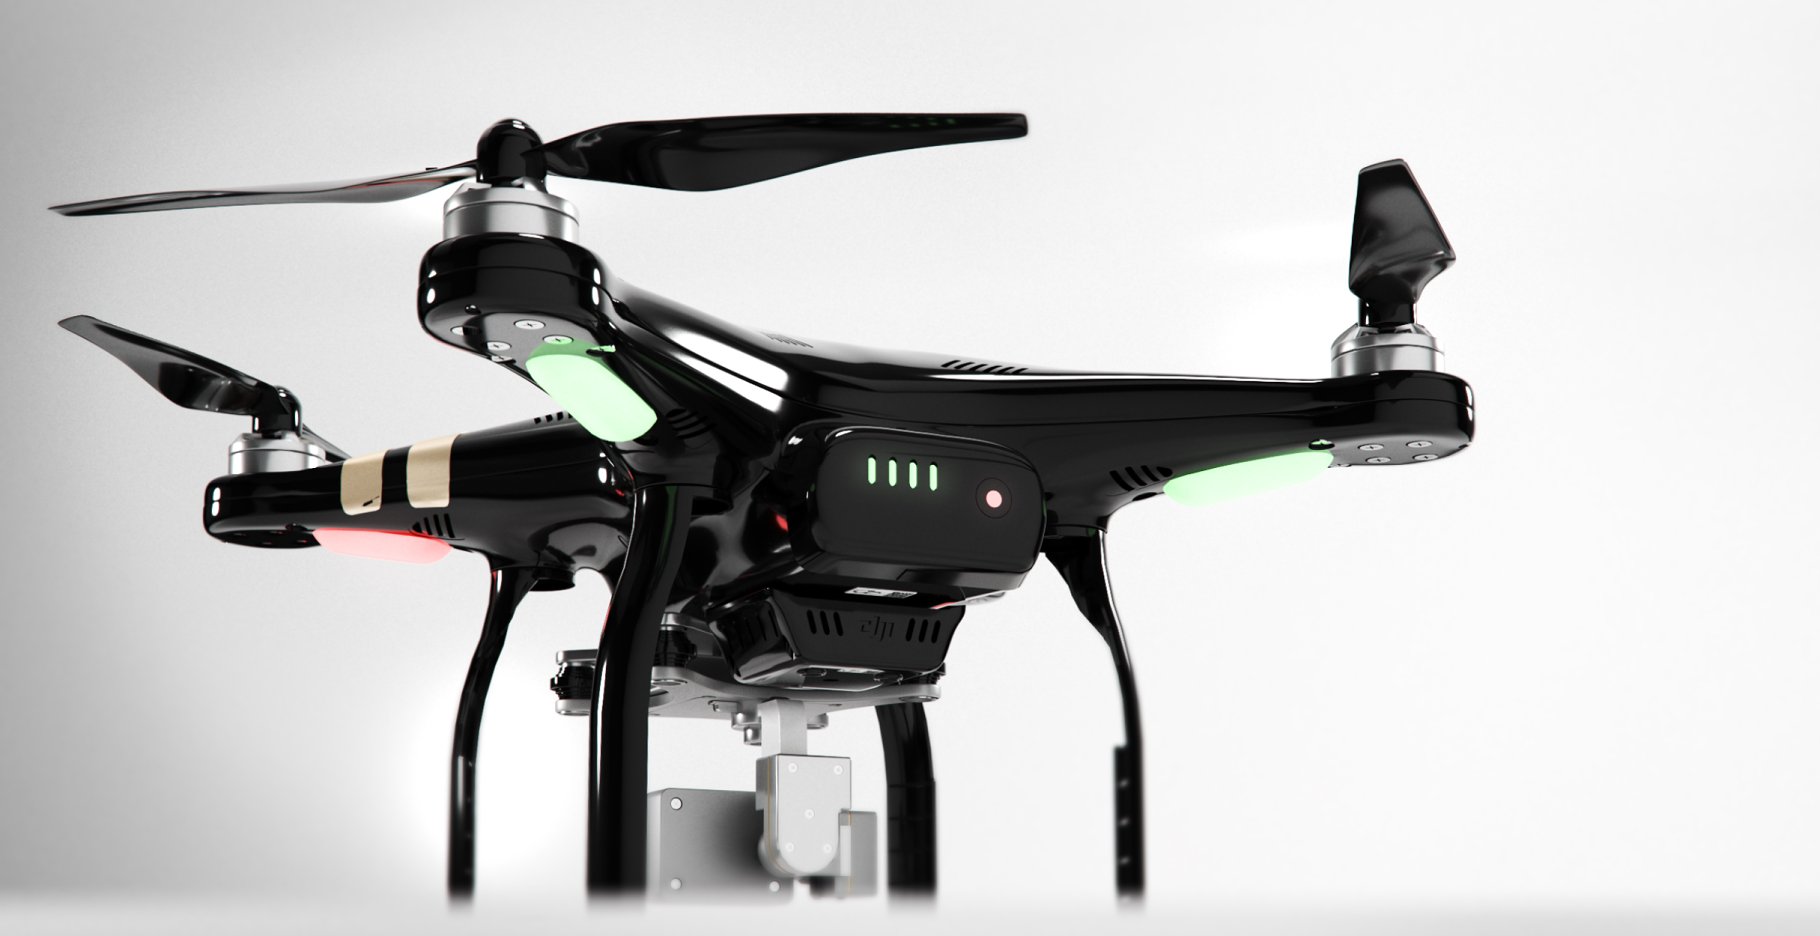 Beautiful rendering of a black DJI Phantom 3 drone